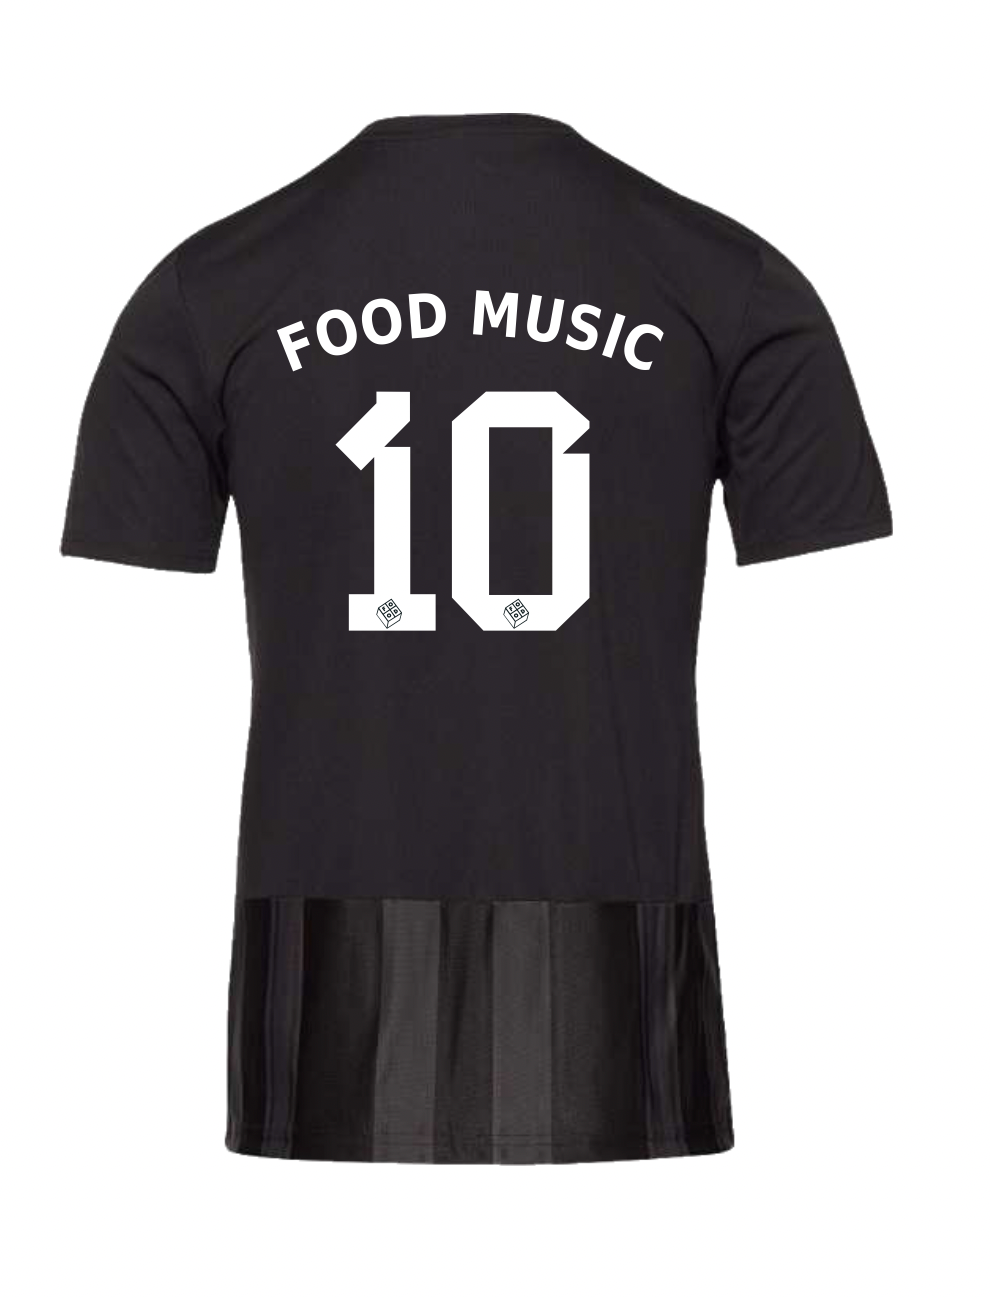 LIMITED EDITION 10 Year Anniversary Football Shirt